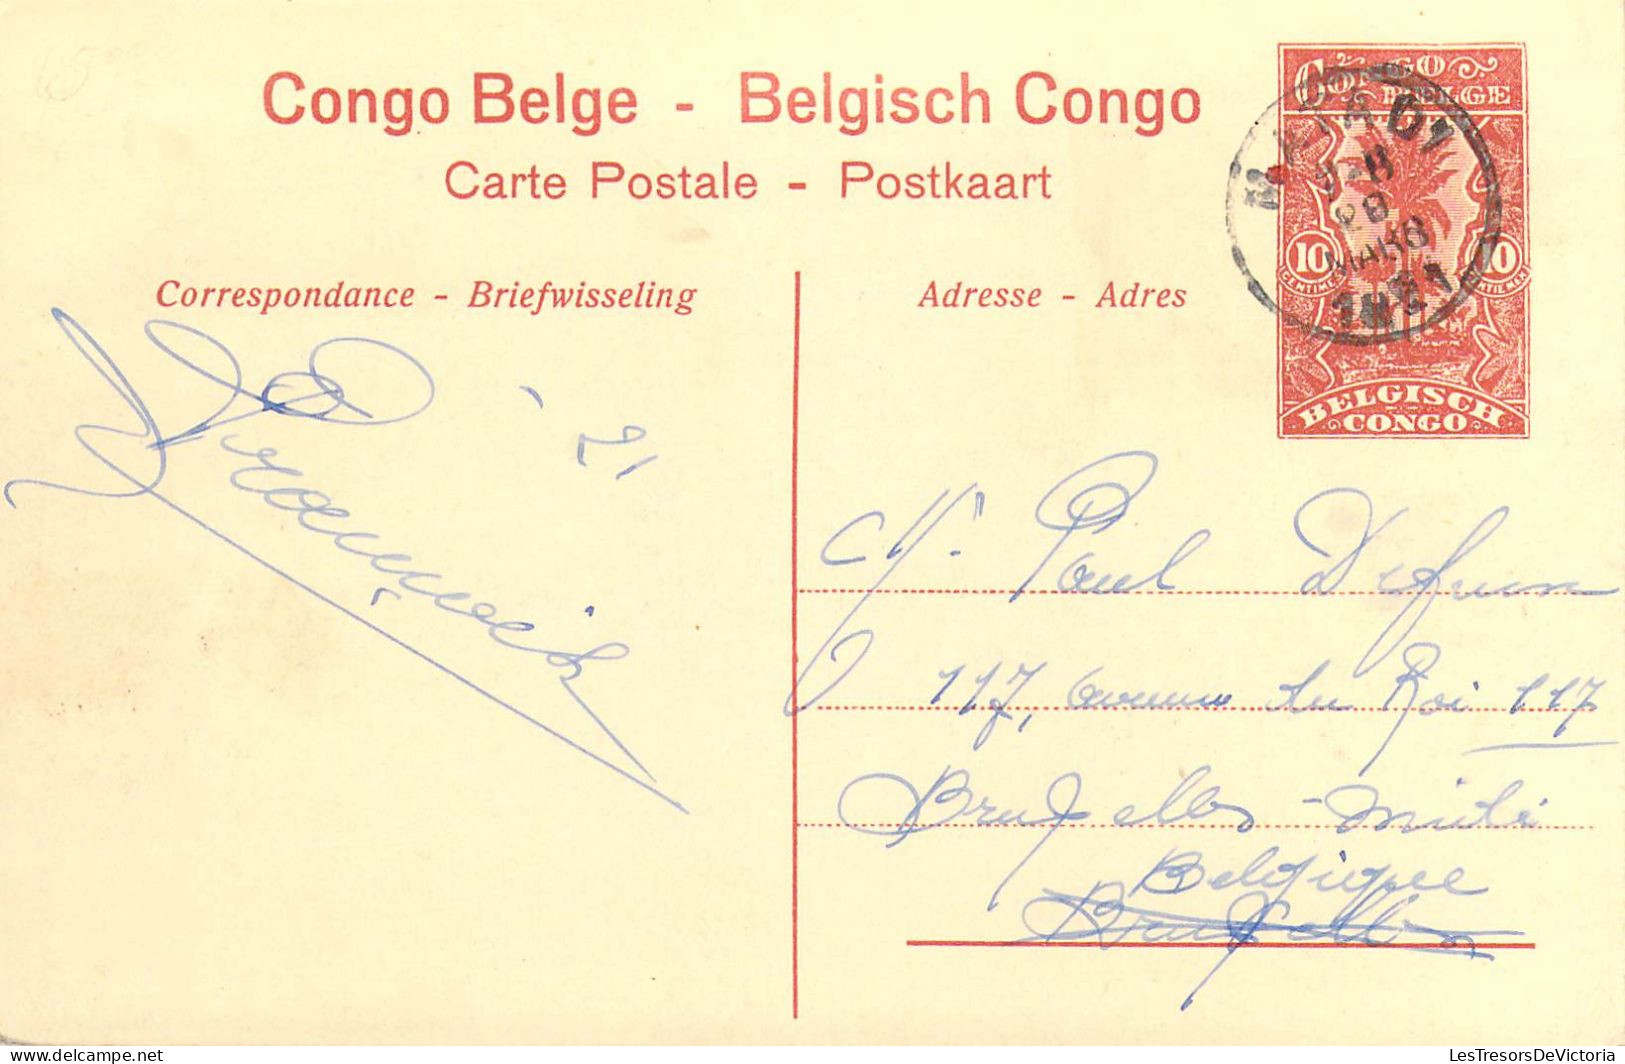 CONGO BELGE - Vue Panoramique De Matadi - Carte Postale Ancienne - Congo Belge